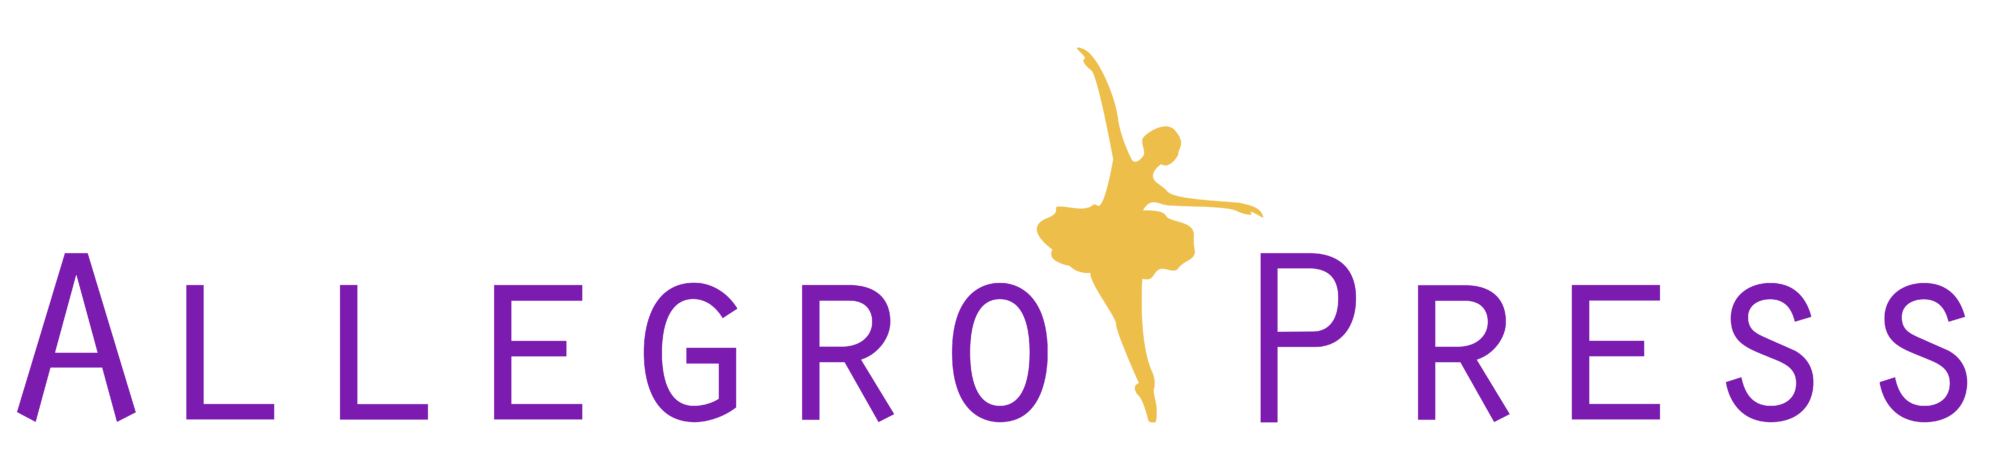 allegropress-logo